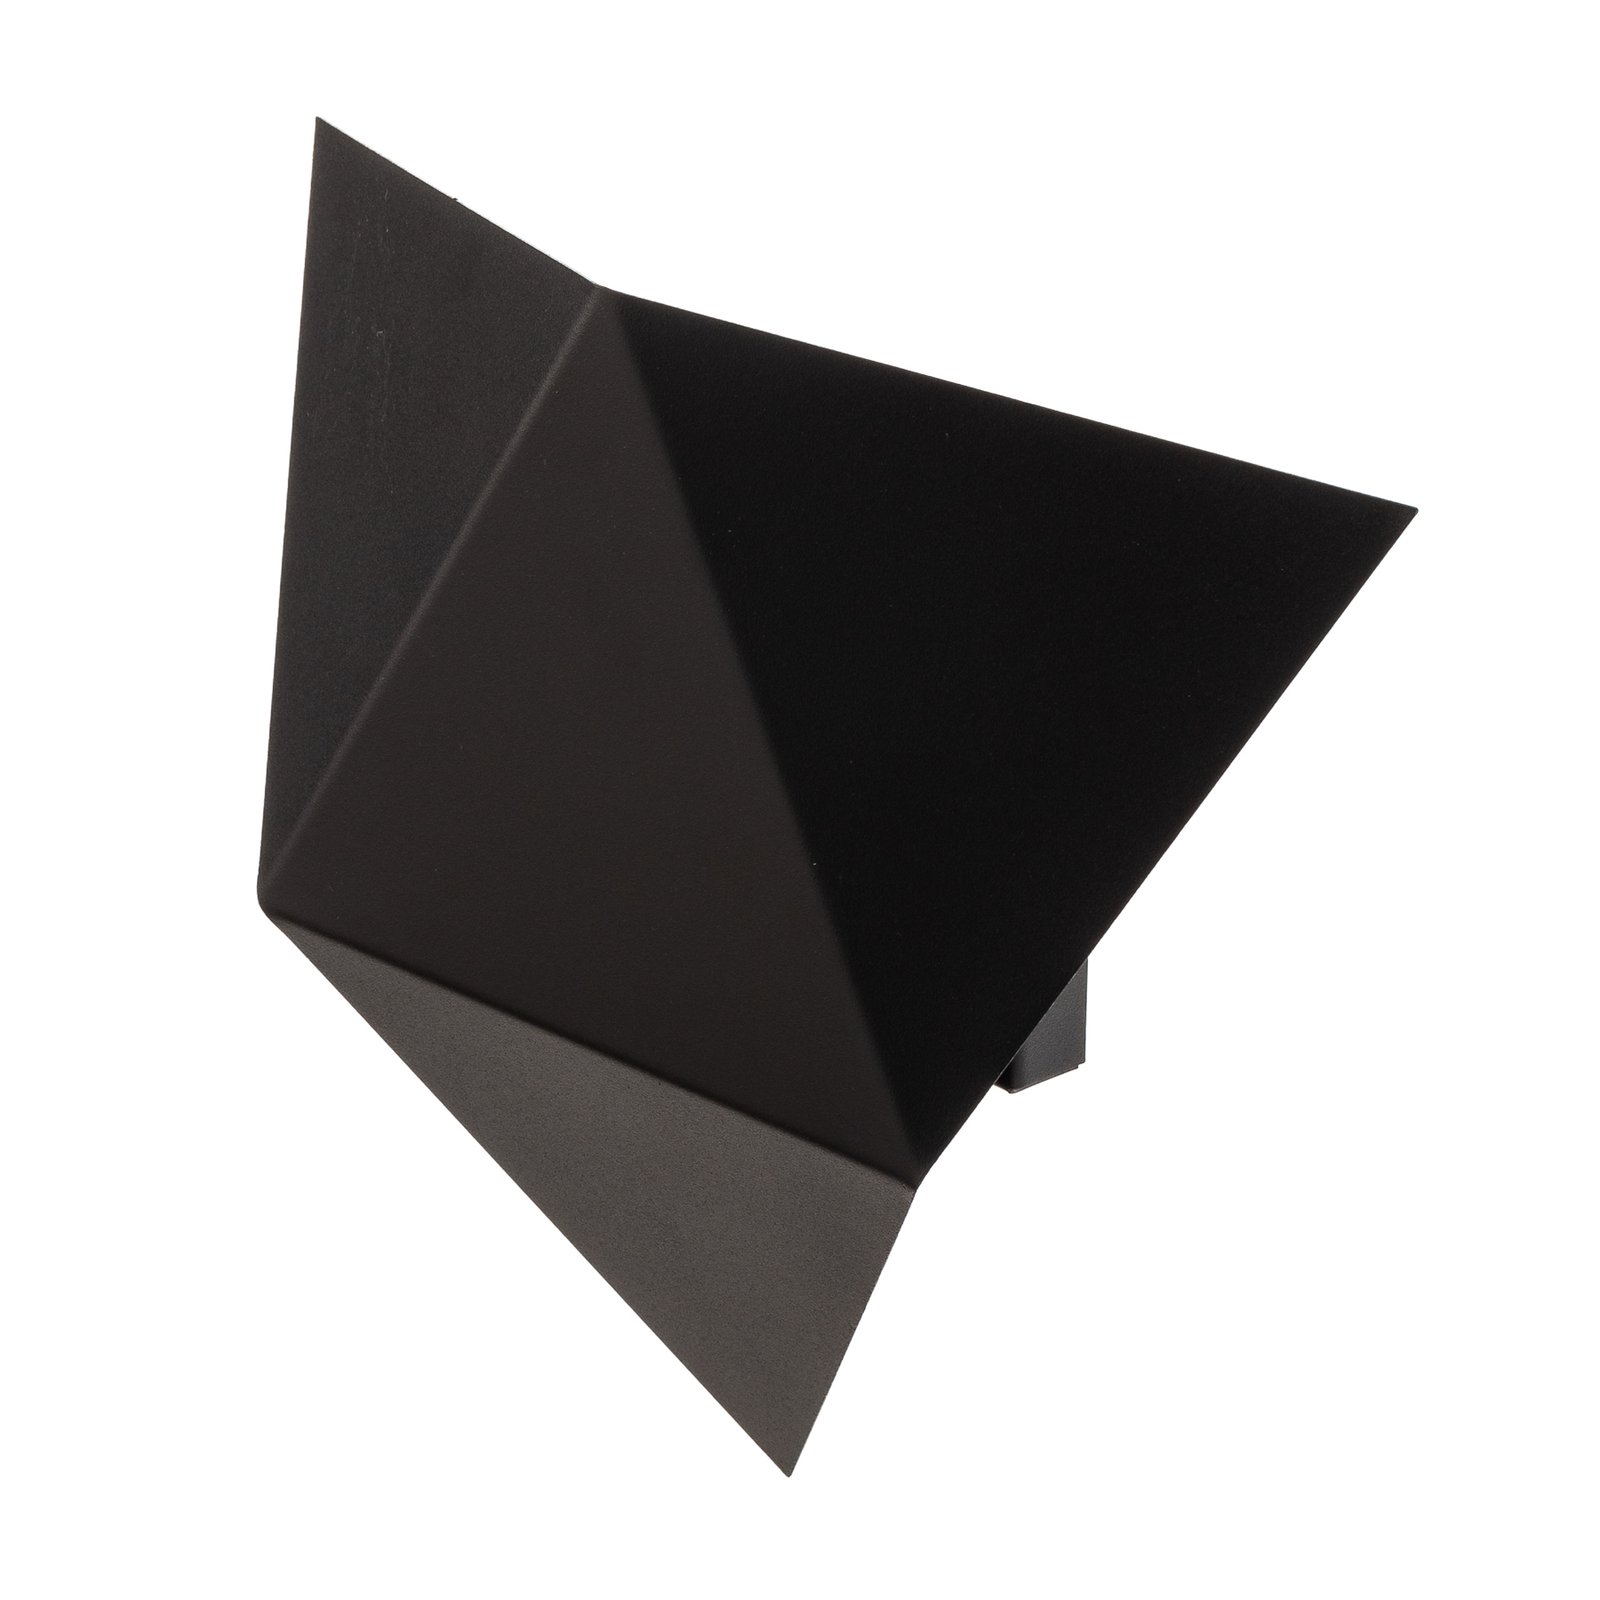 Wandlampe Shield in kantiger Form, schwarz